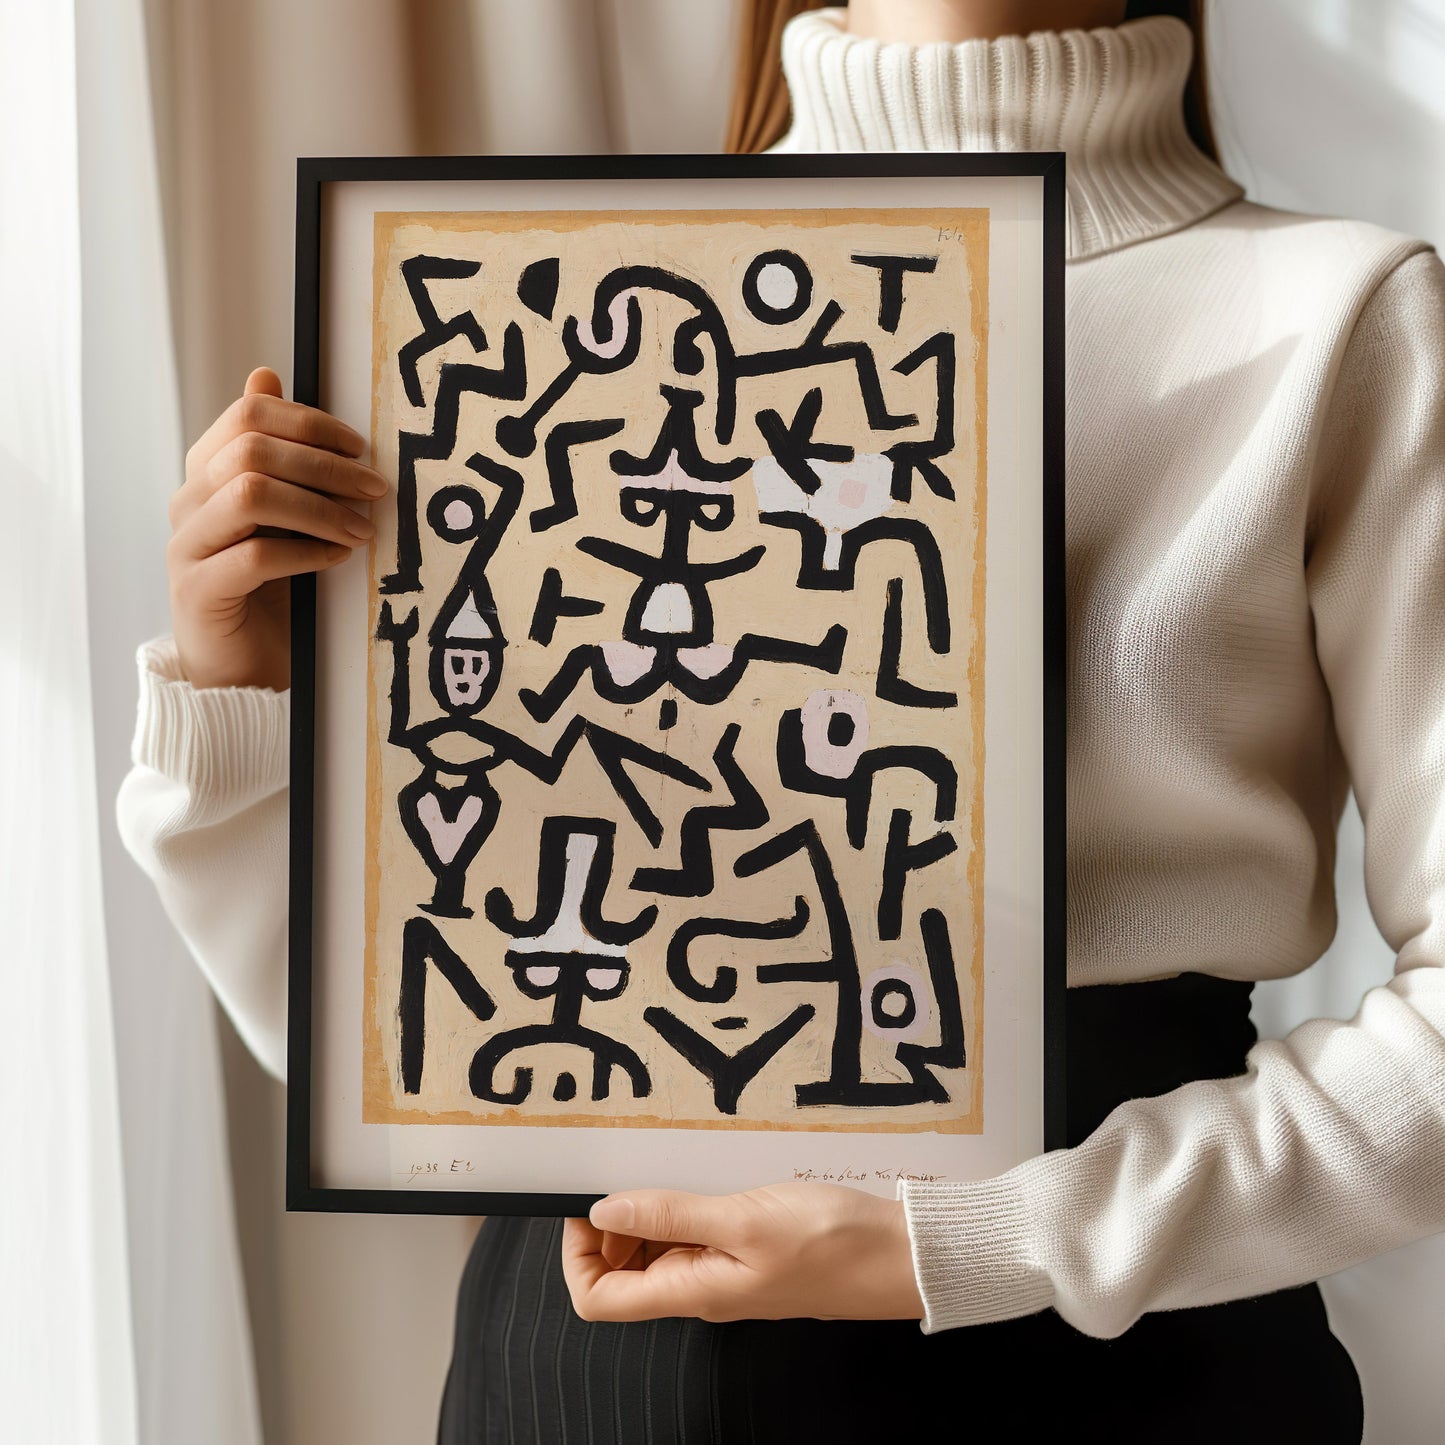 Paul Klee - Comedian's Handbill | Neutral Beige Modern Abstract Art (available framed or unframed)